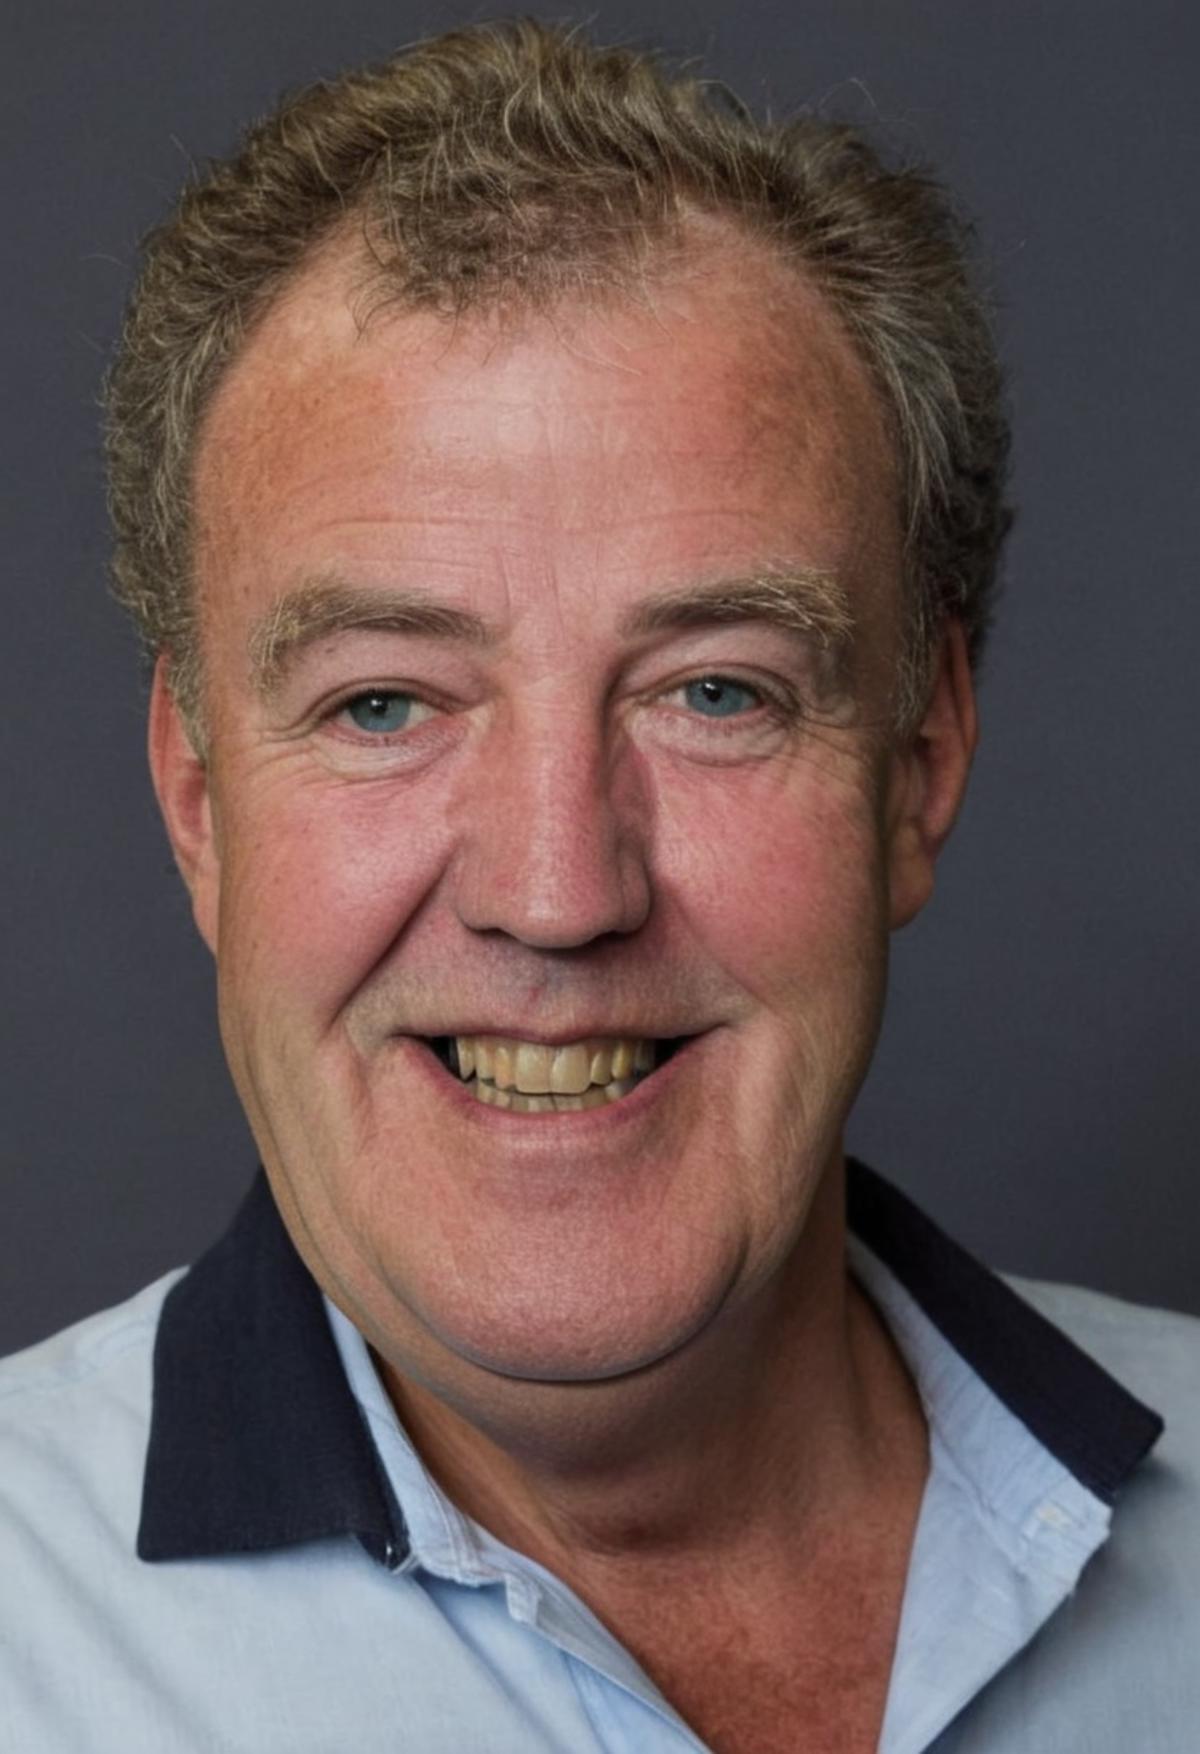 Jeremy Clarkson XL image by RojerDodger